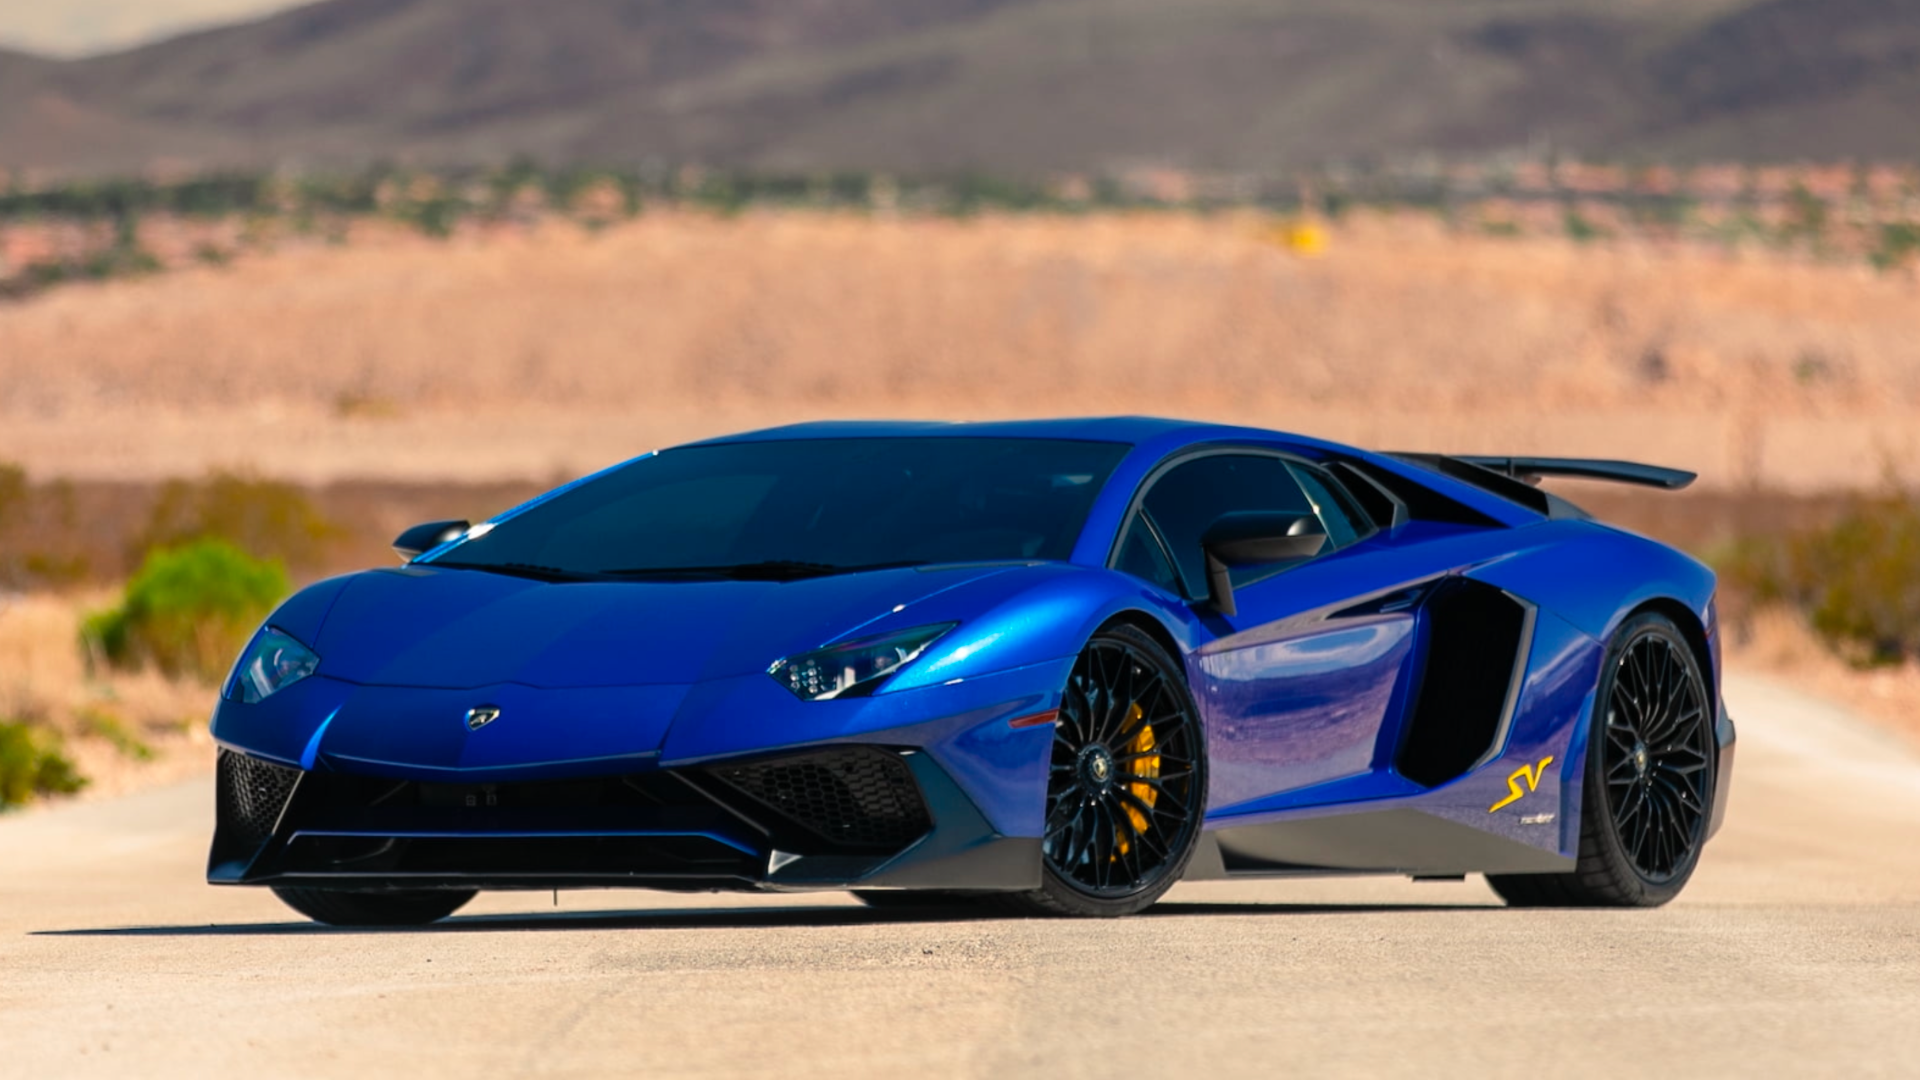 Bid on This Lamborghini Aventador In Stunning Blue